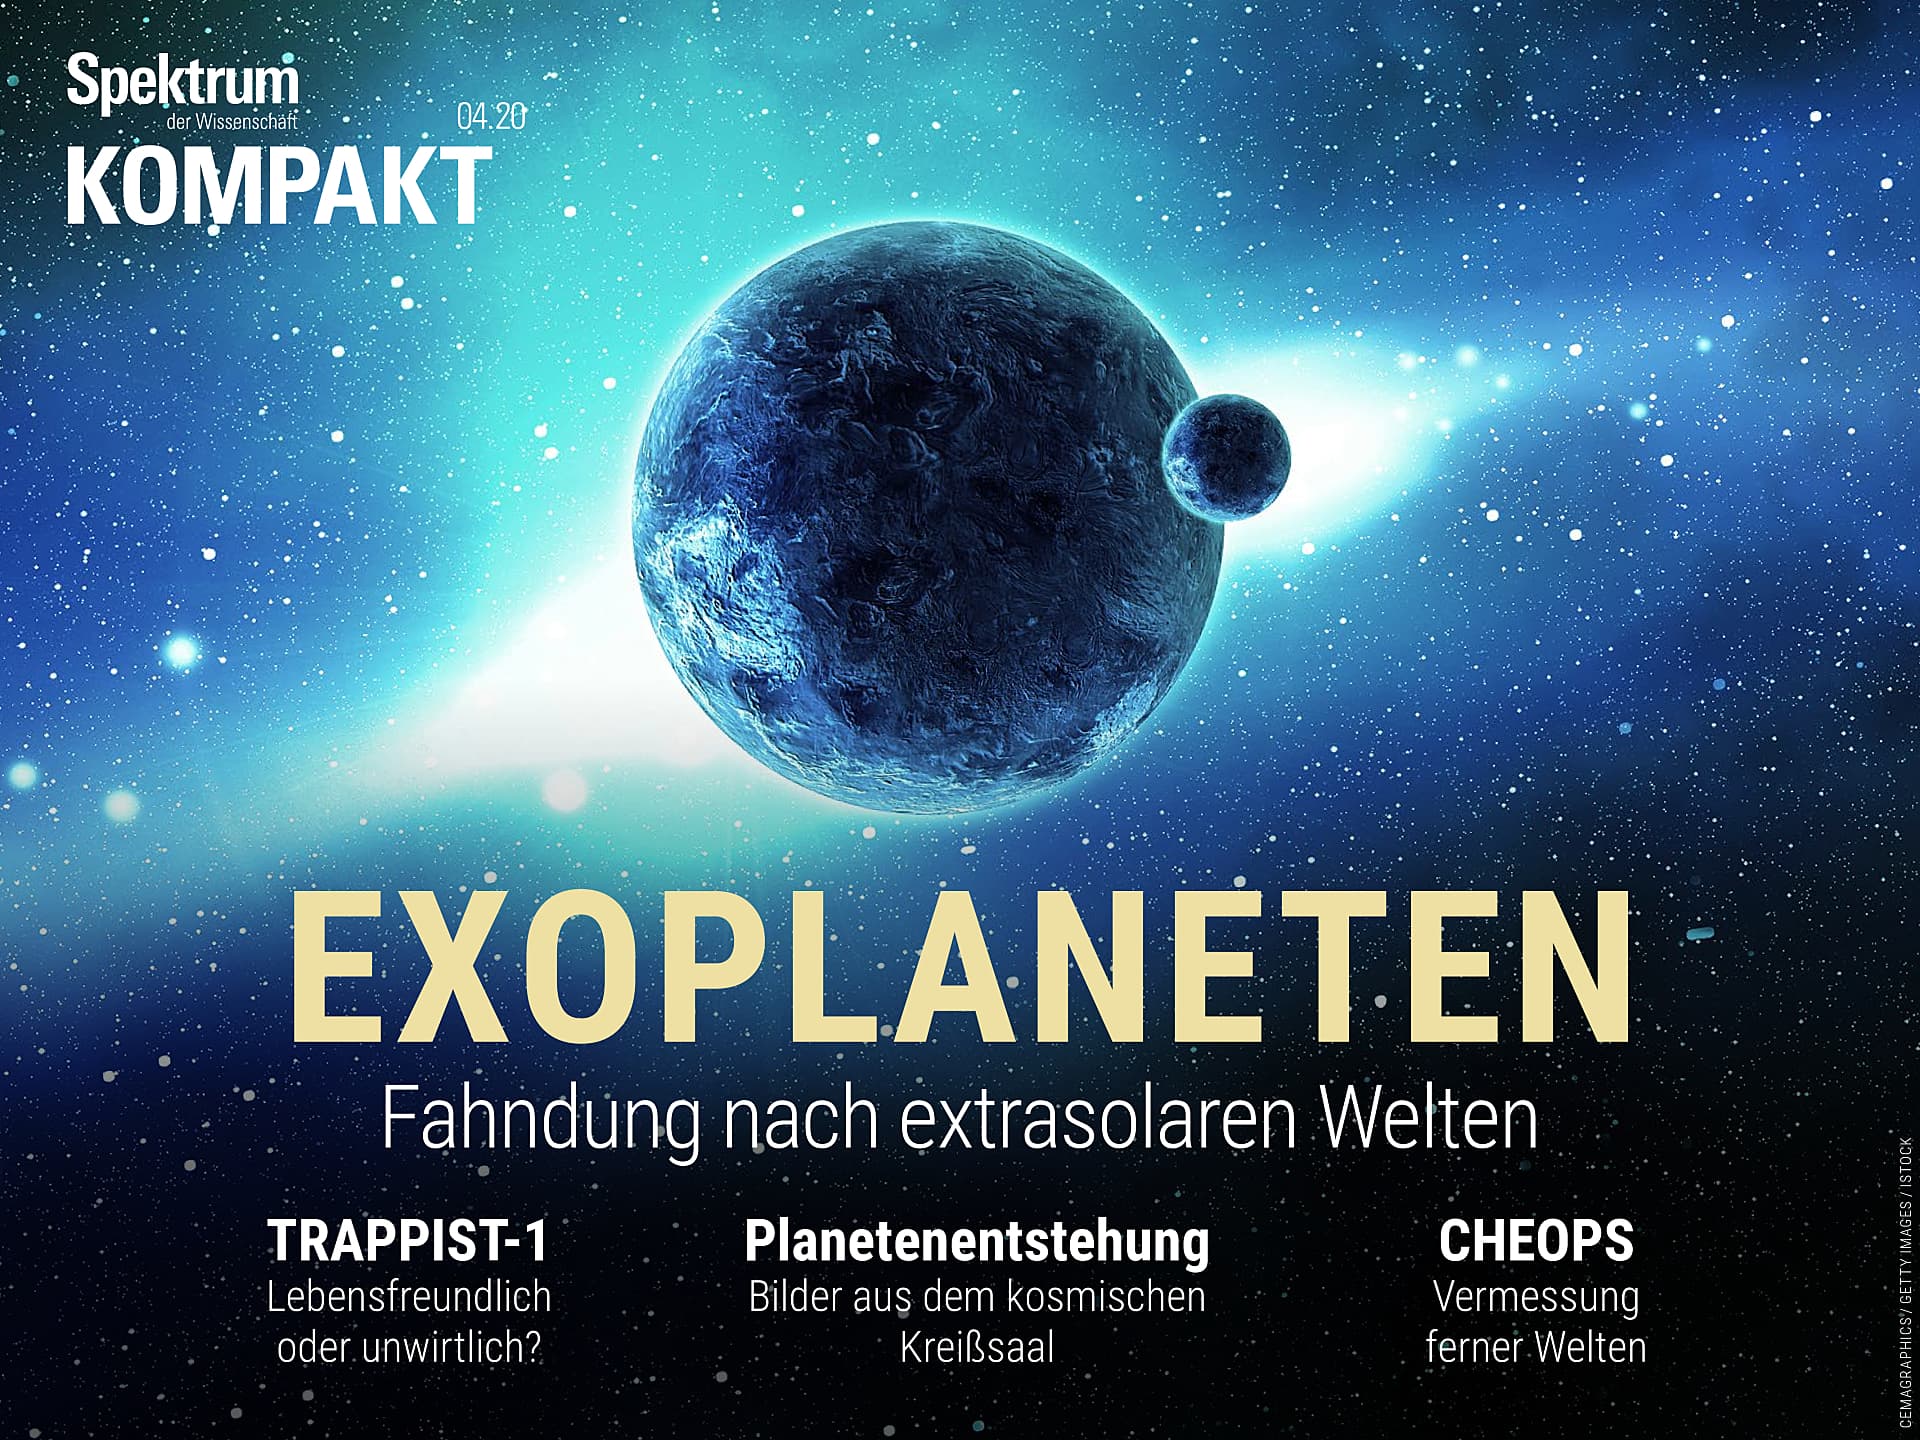 Exoplaneten - Fahndung nach extrasolaren Welten